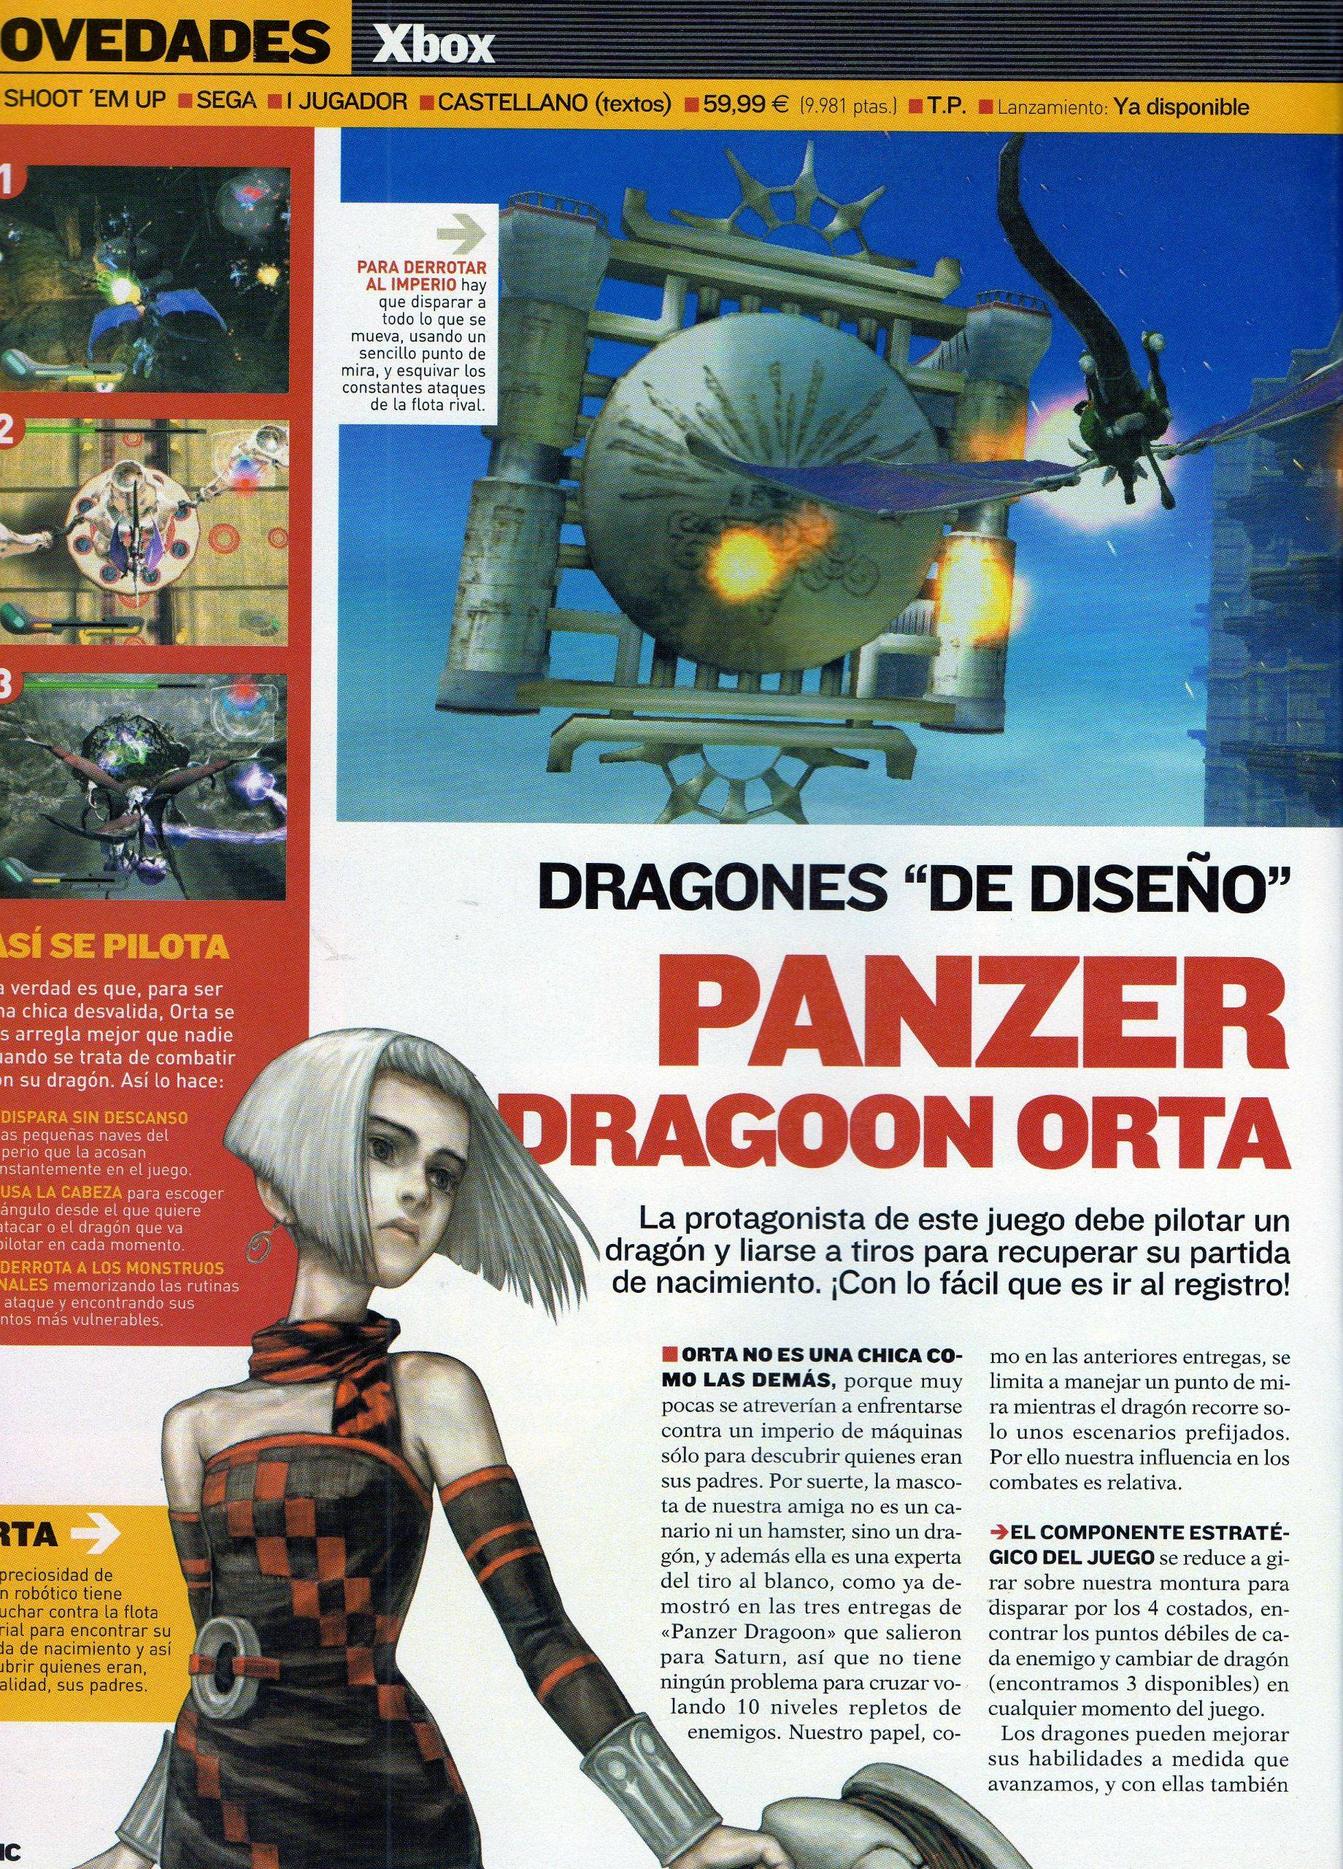 Portuguese Panzer Dragoon Gaming Magazine Scans